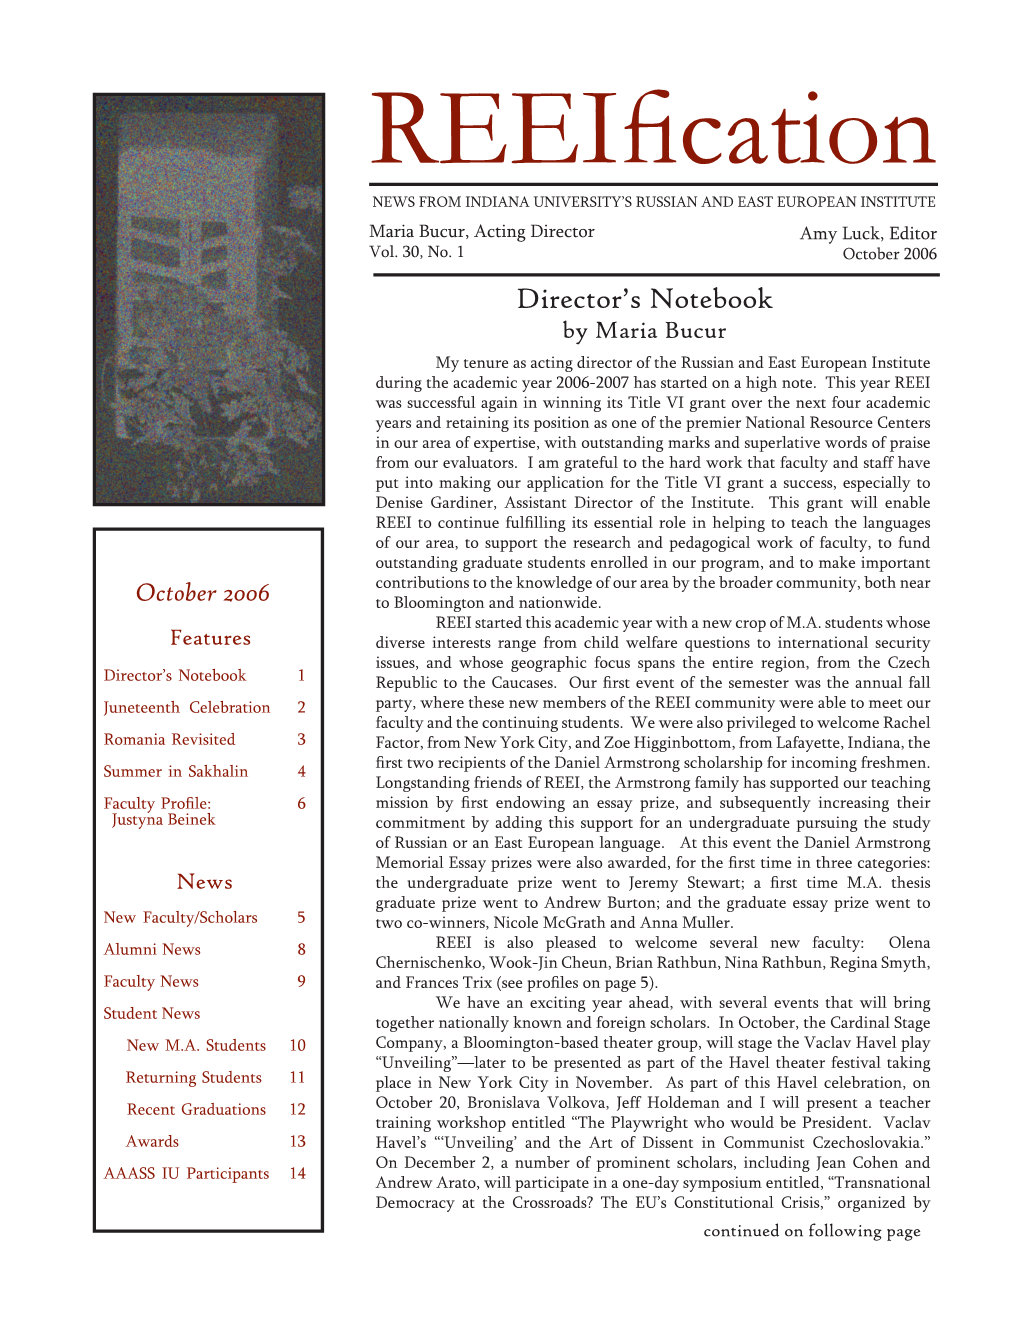 Reeification, October 2006 3